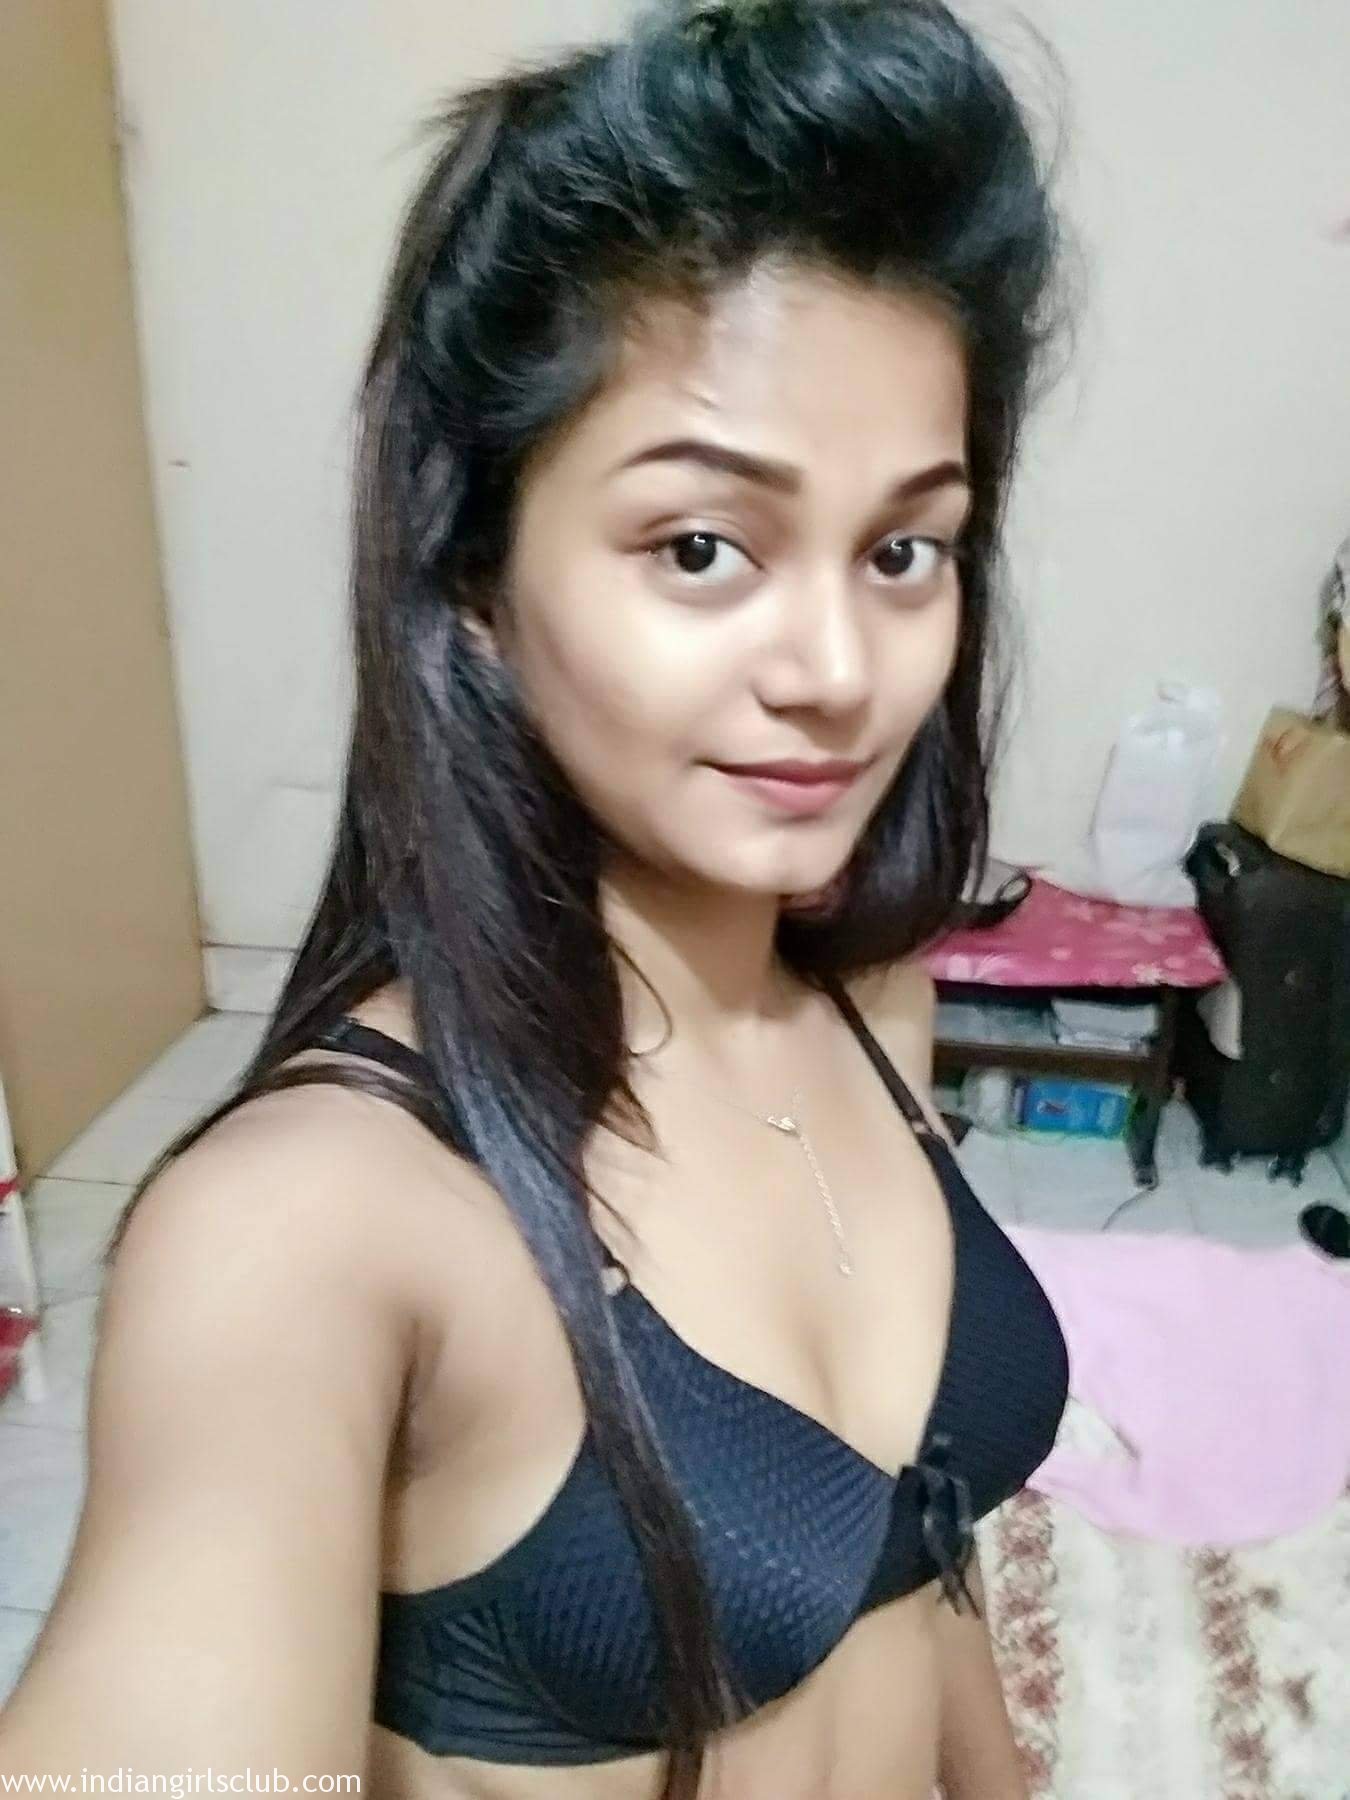 juicy_indian_teen_homemade_porn_7 - Indian Girls Club